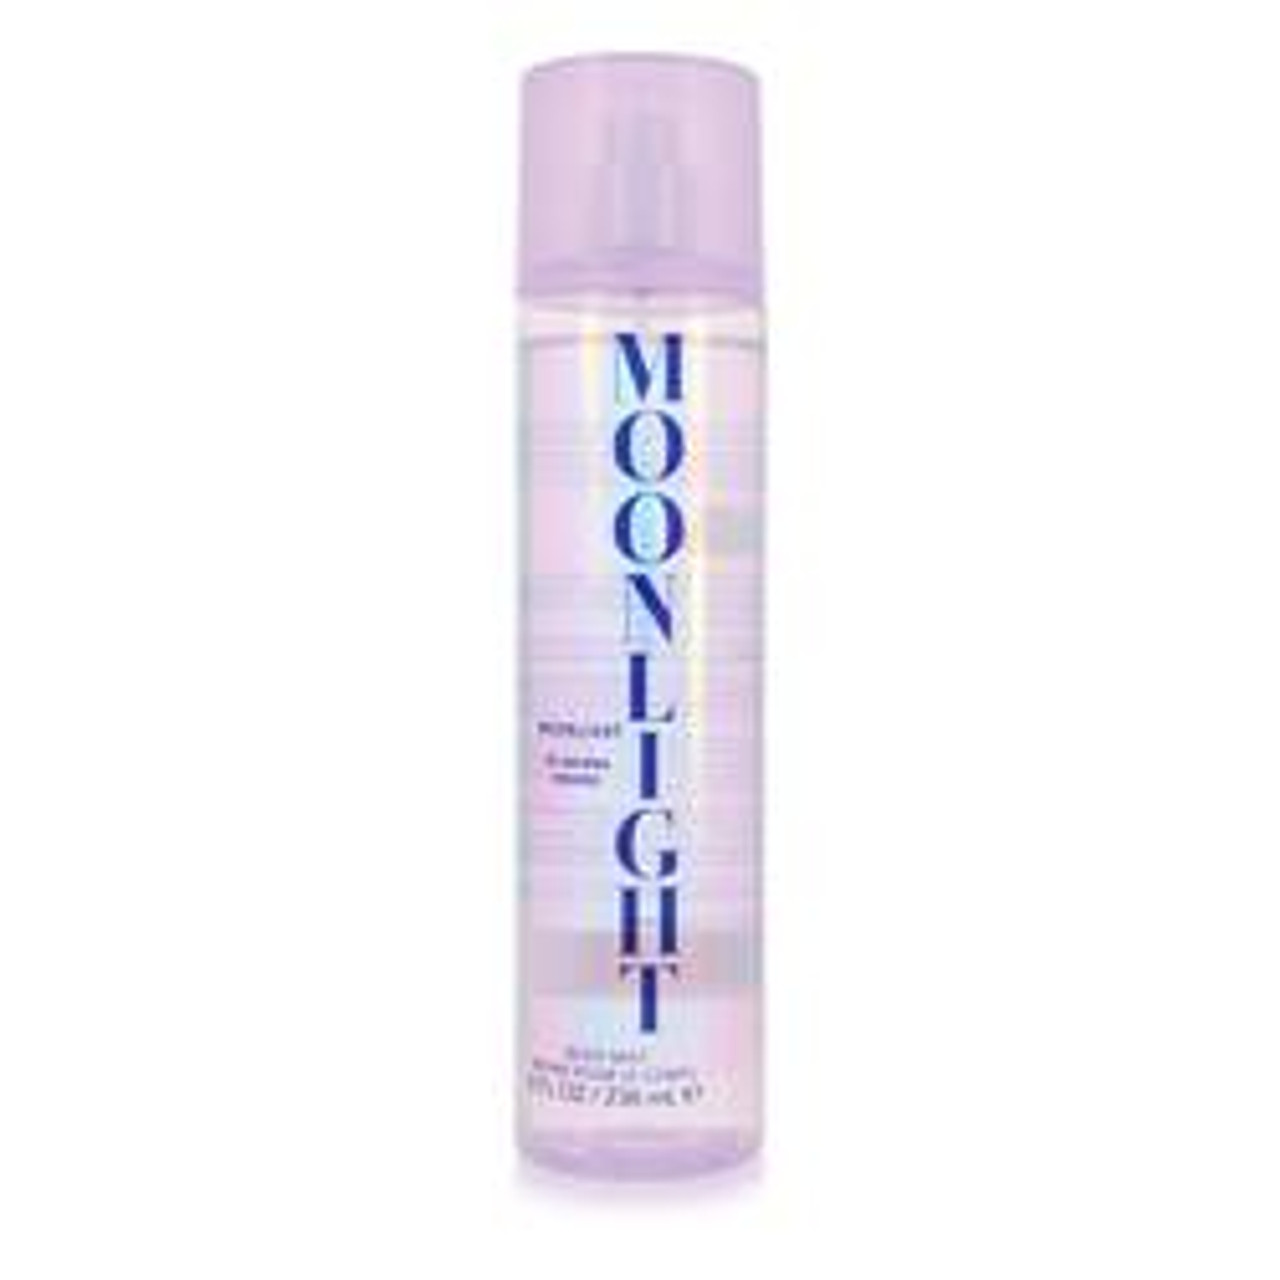 Ariana Grande Moonlight Perfume By Ariana Grande Body Mist Spray 8 oz for Women - [From 64.00 - Choose pk Qty ] - *Ships from Miami